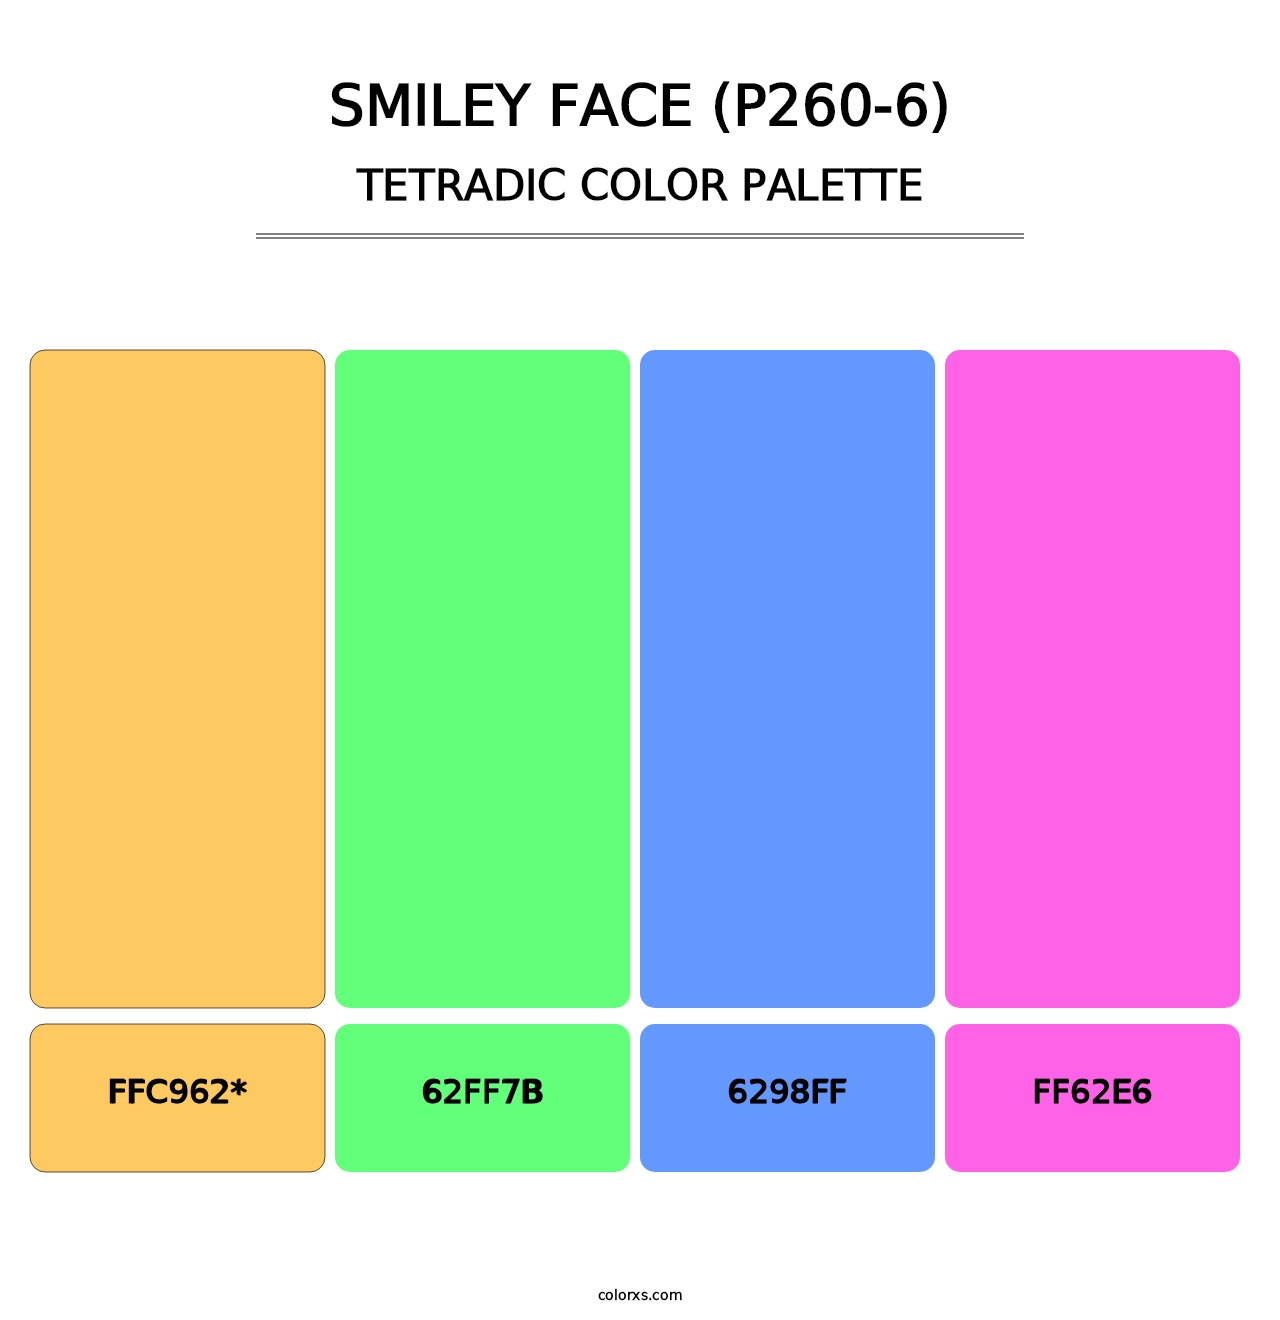 Smiley Face (P260-6) - Tetradic Color Palette